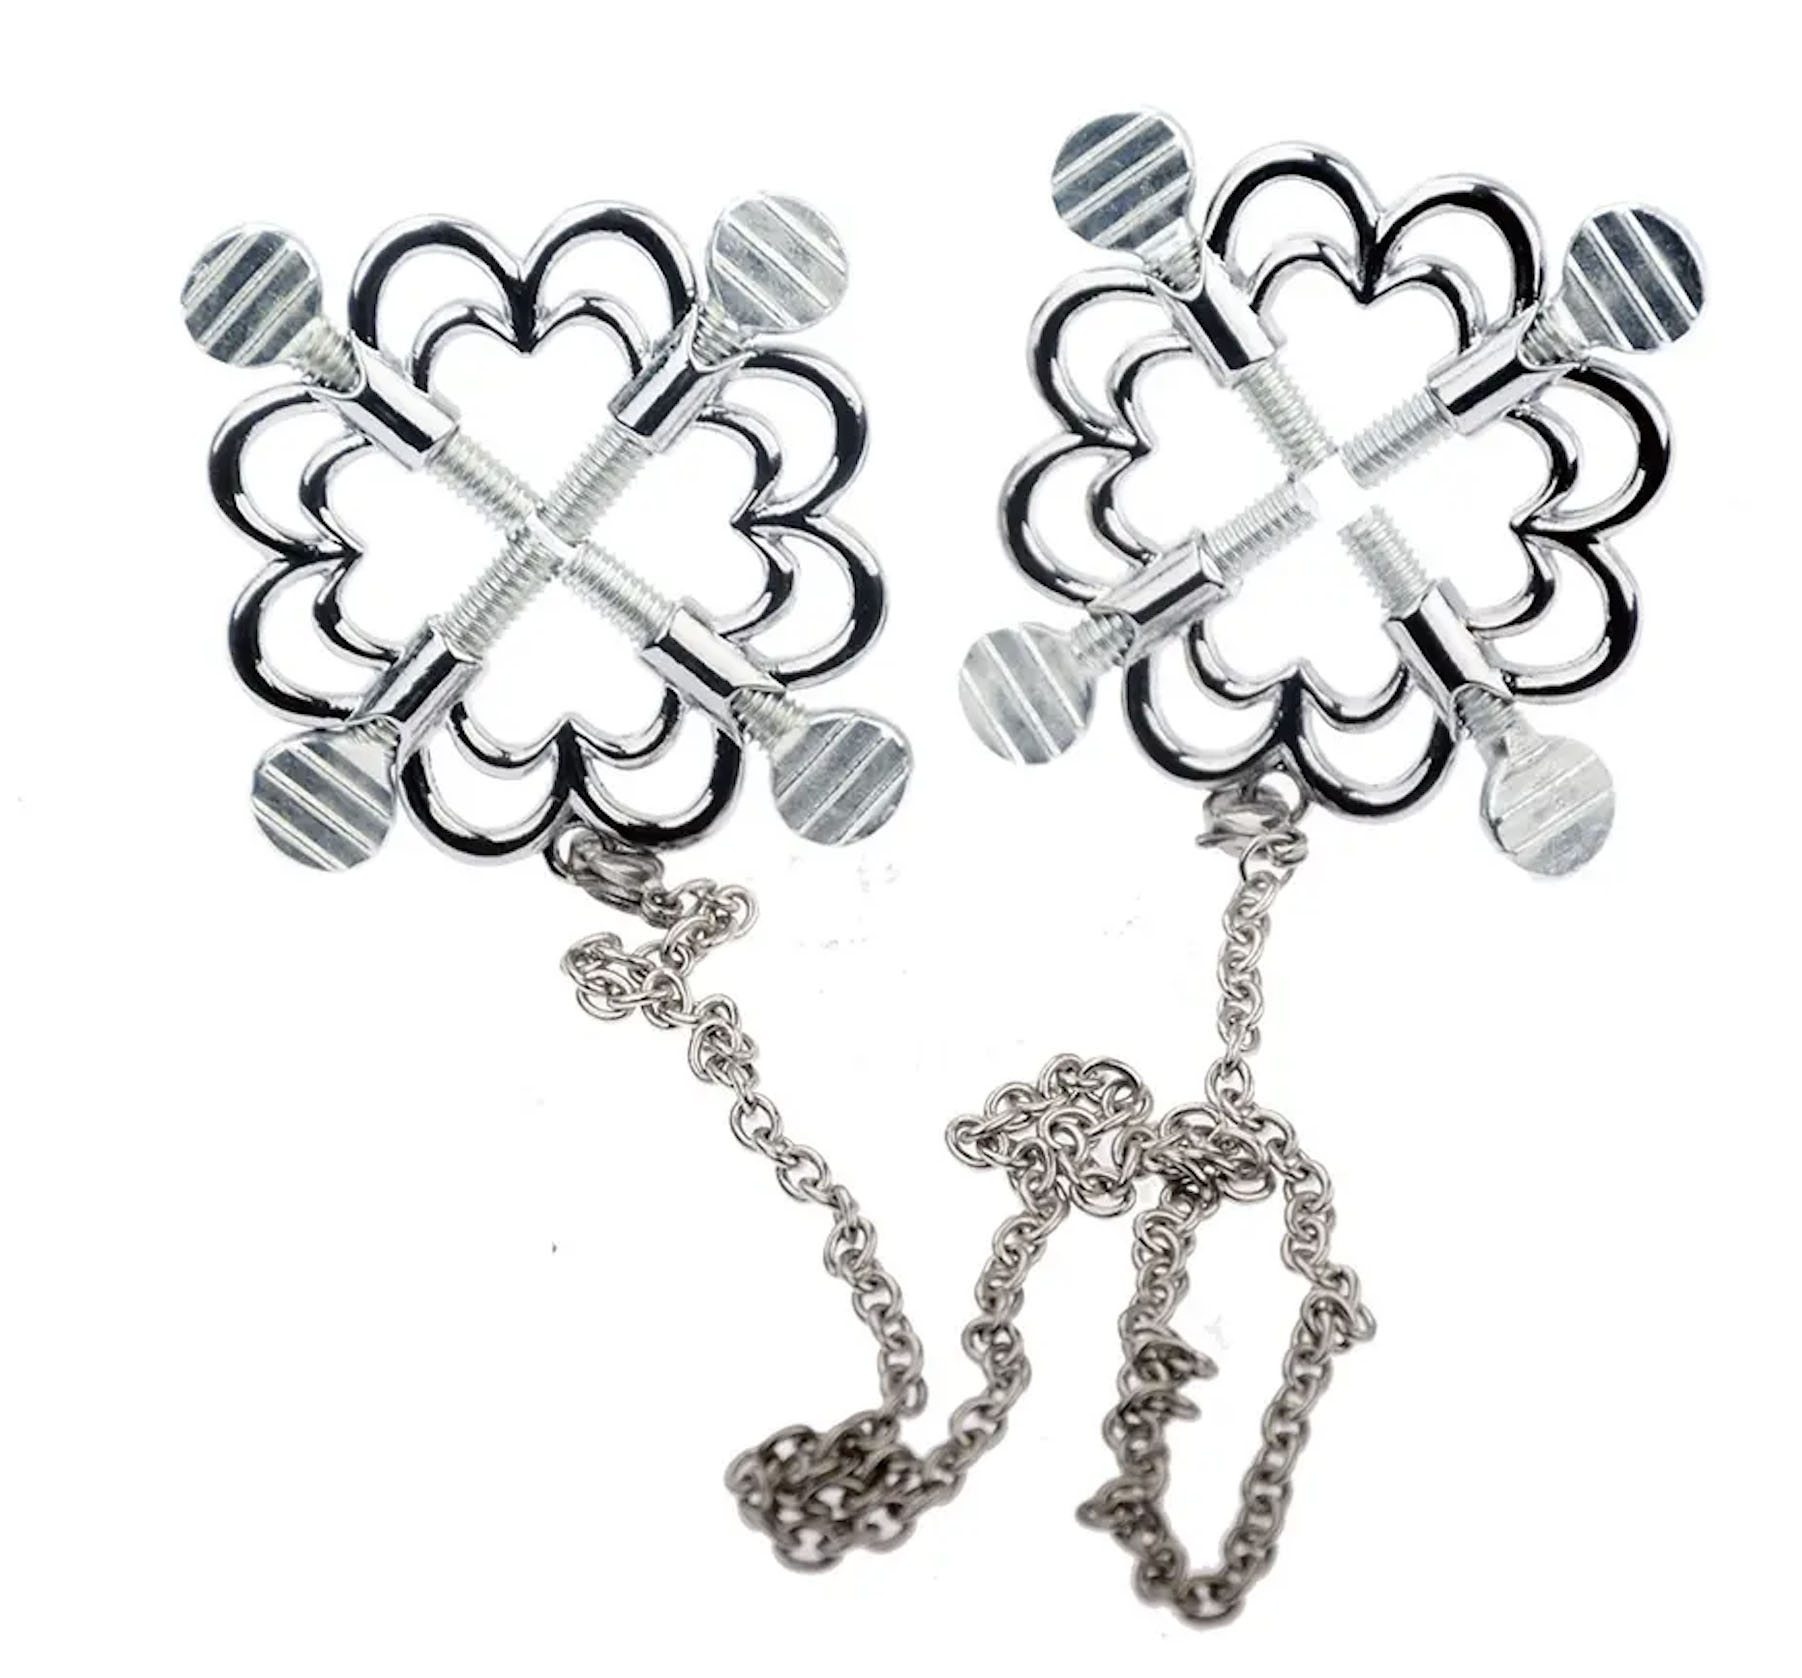 Zwei Brustwarzenklemmen Nipple Clamps florales Muster mit Verbindungskette